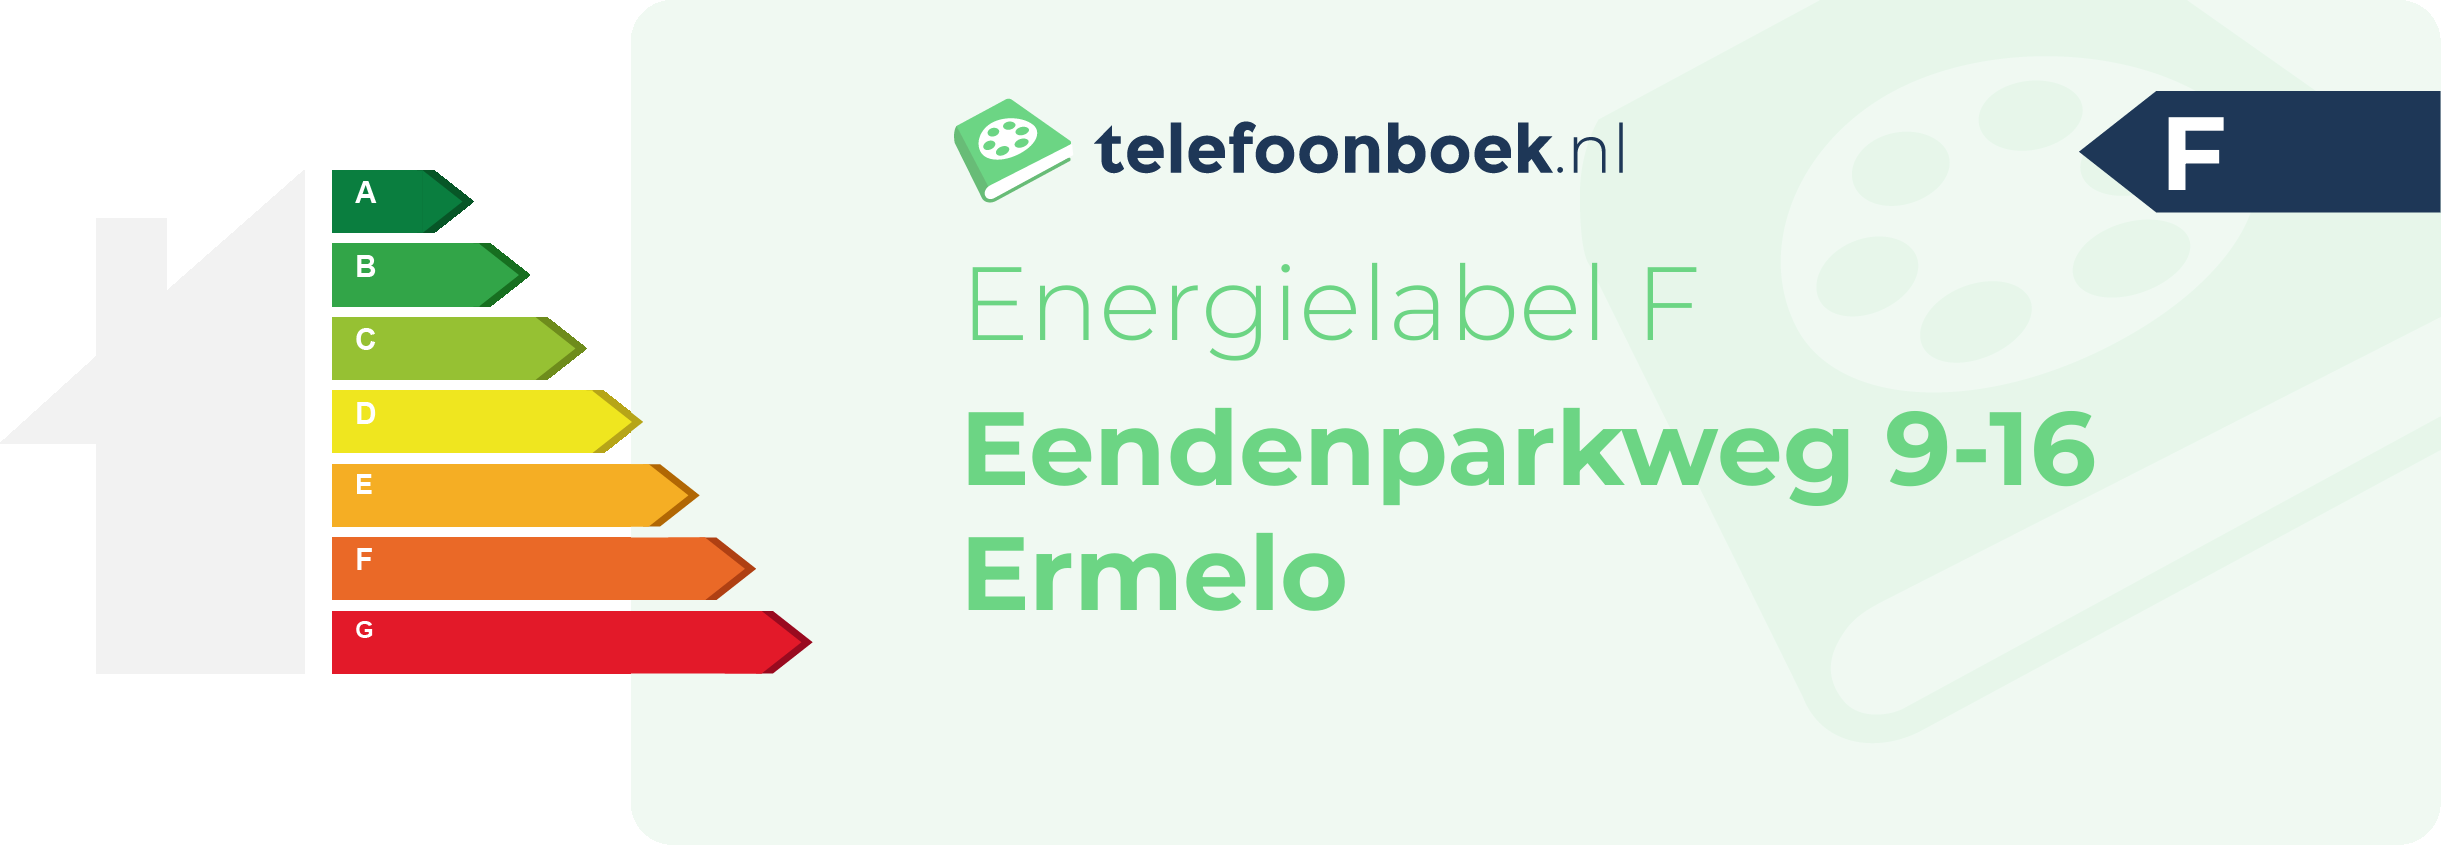 Energielabel Eendenparkweg 9-16 Ermelo